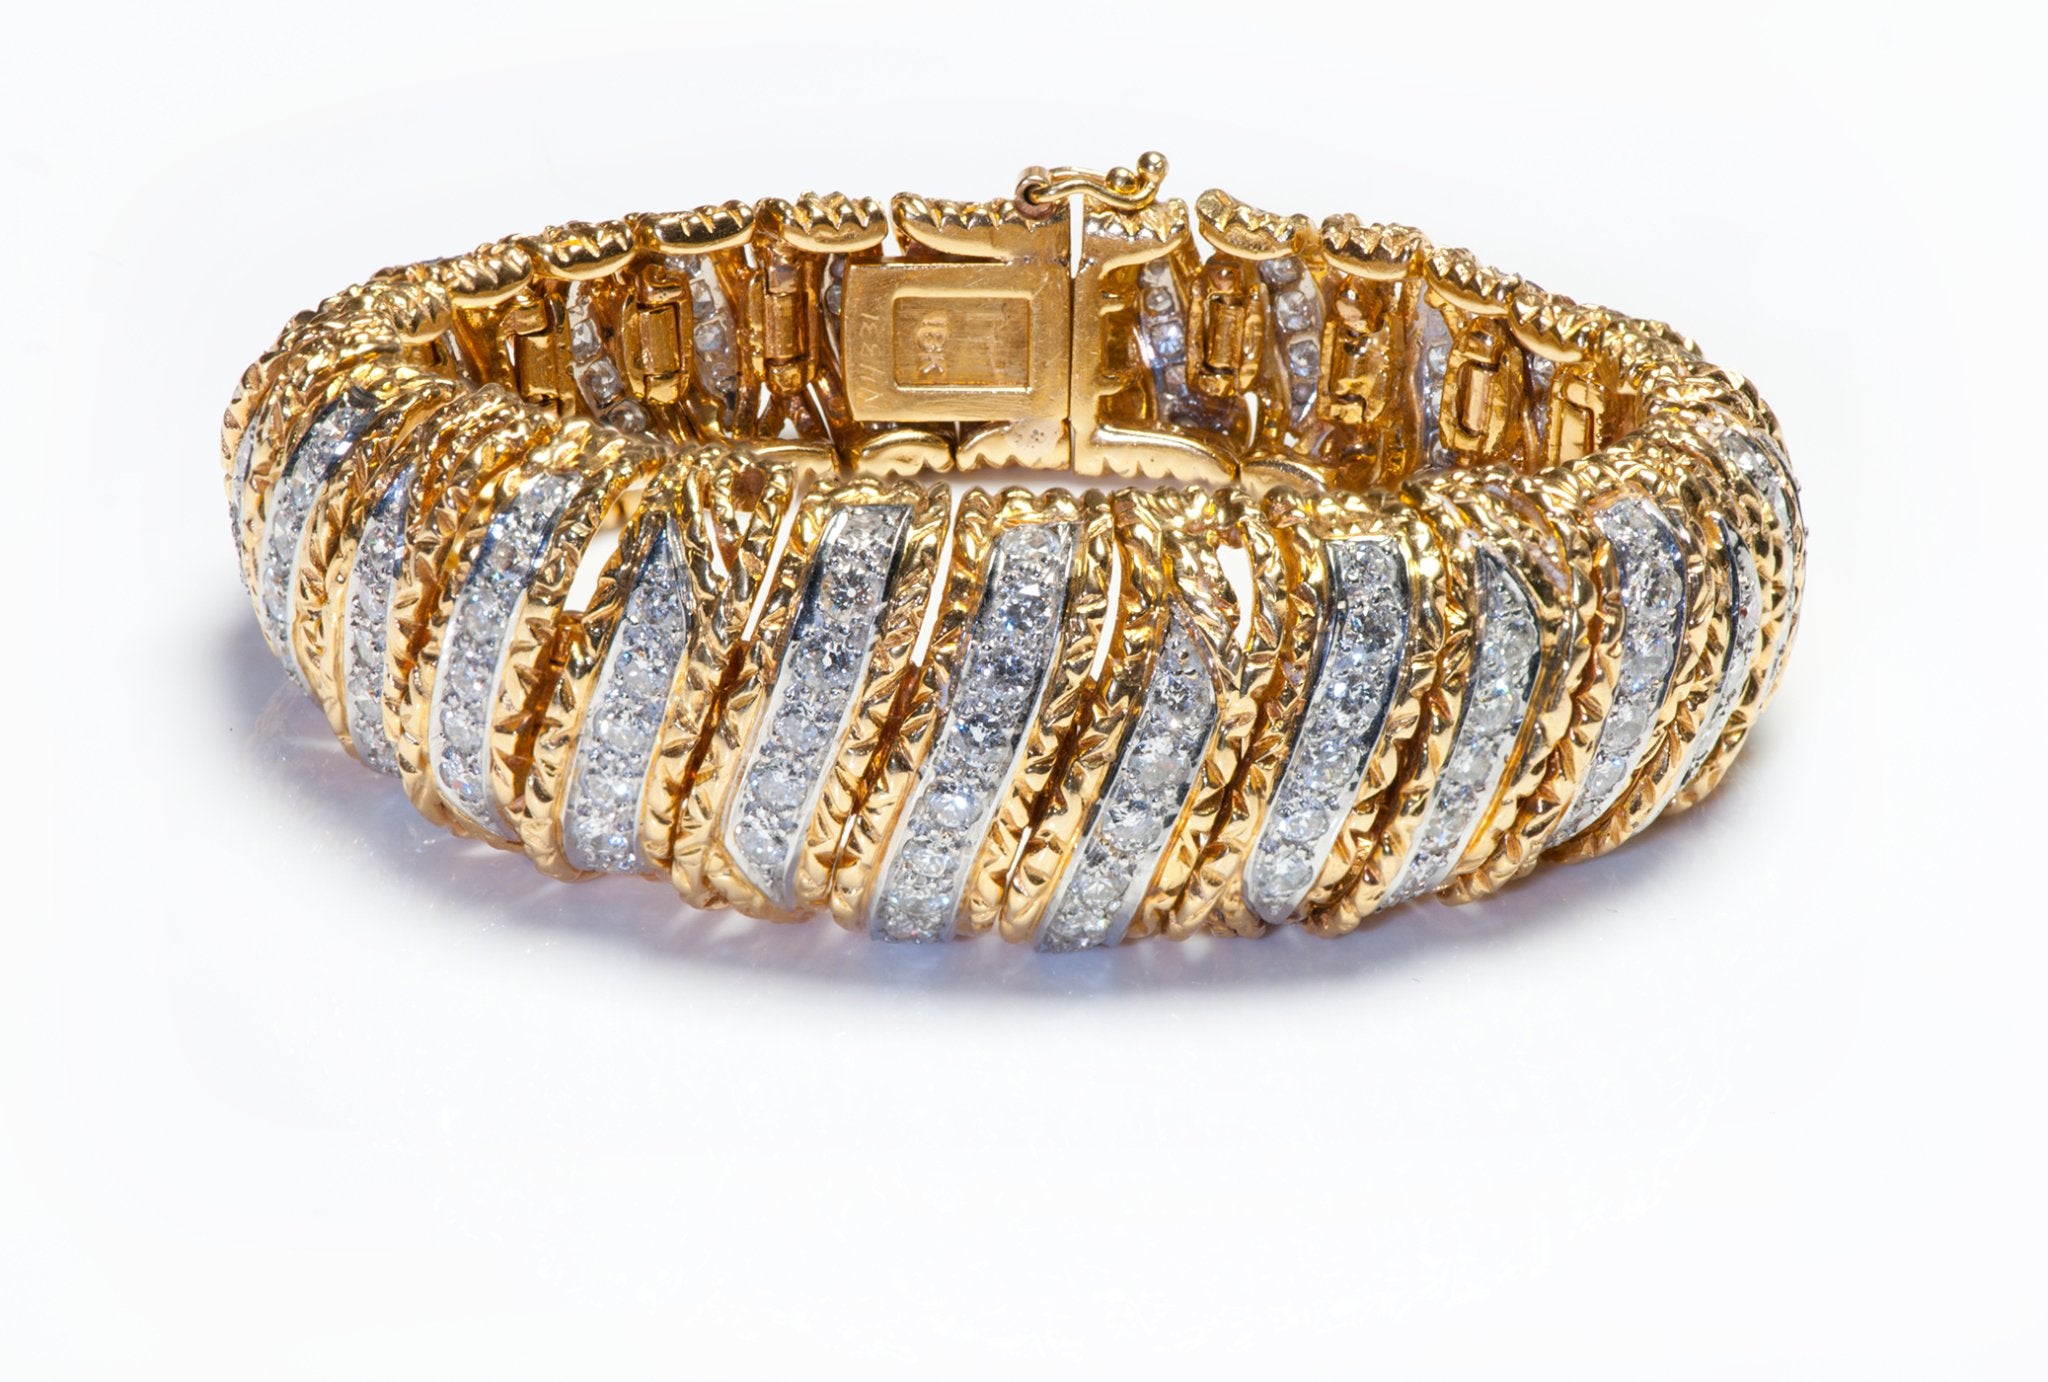 Exquisite Vintage 18K Yellow Gold Diamond Bracelet - DSF Antique Jewelry